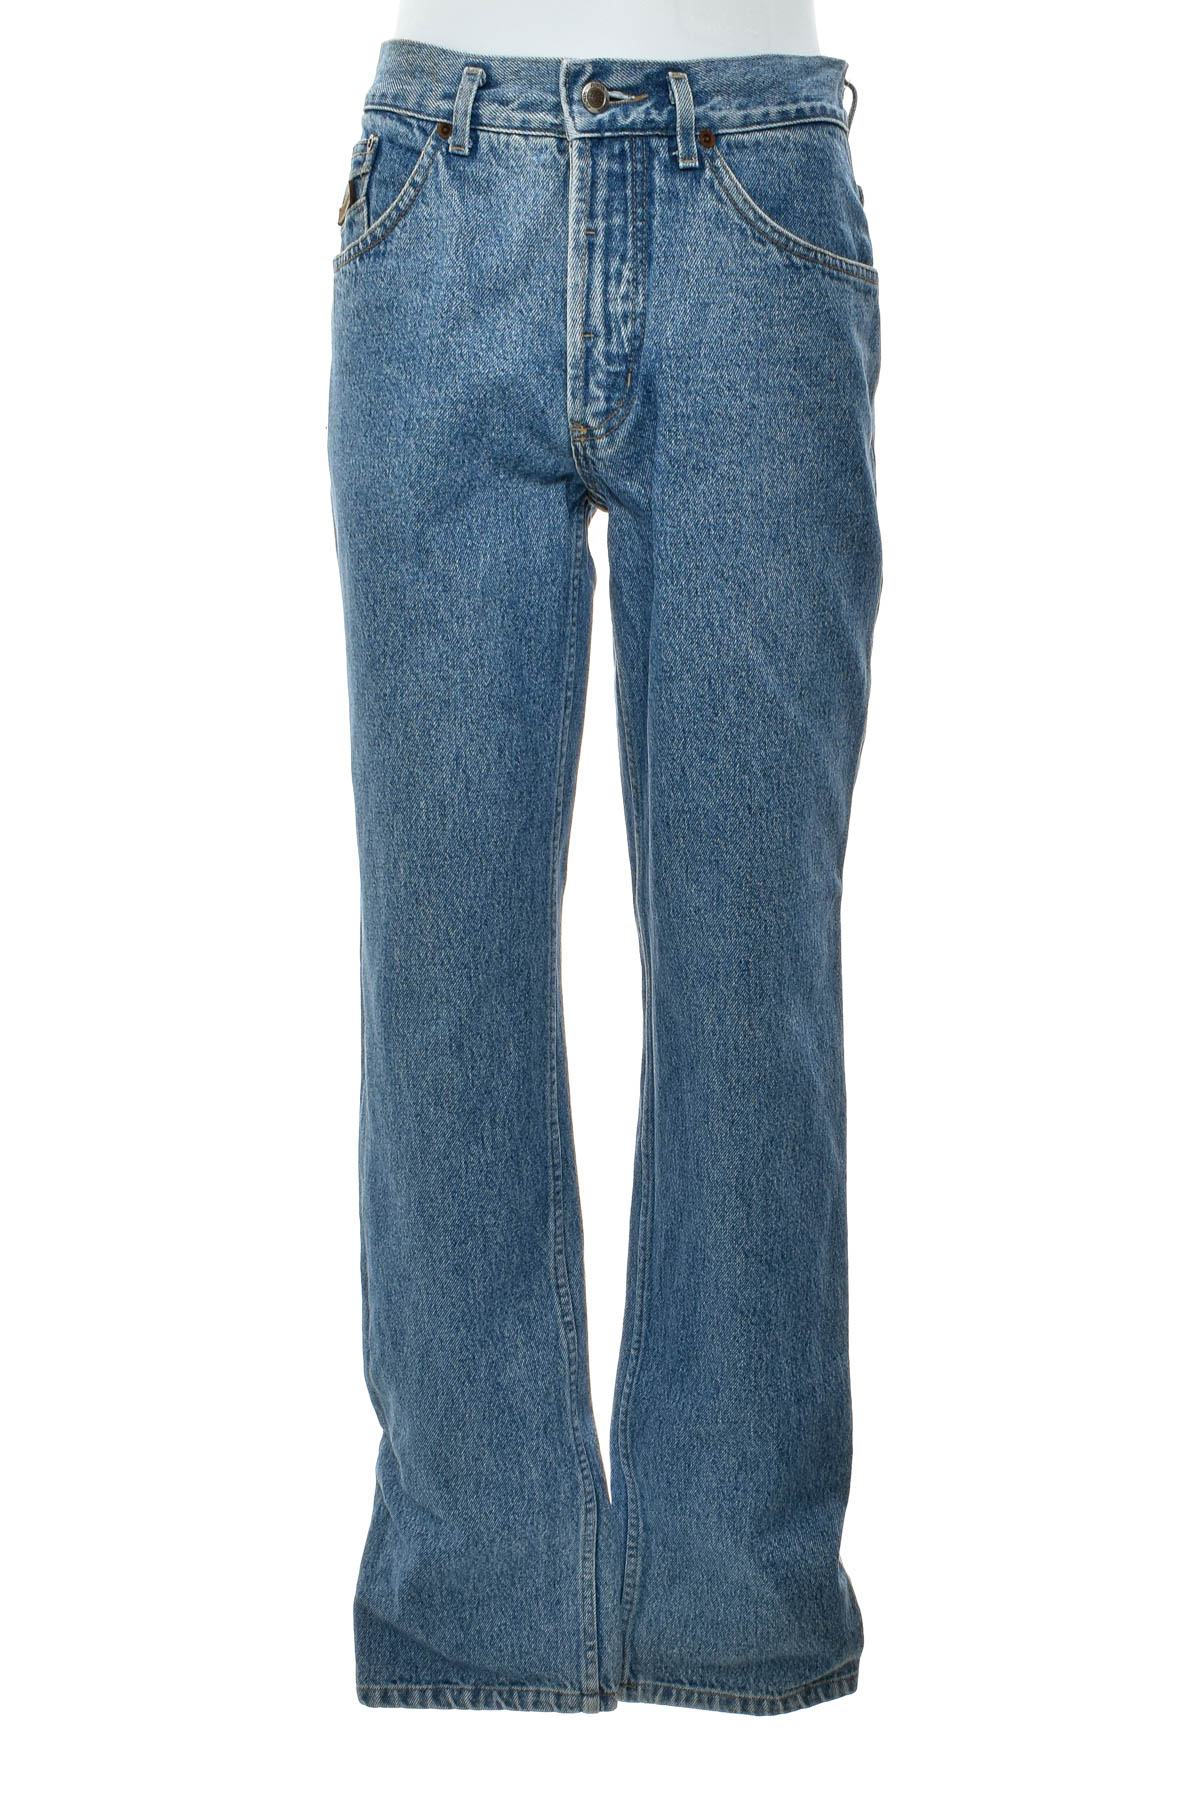 Men's jeans - Pioneer - 0